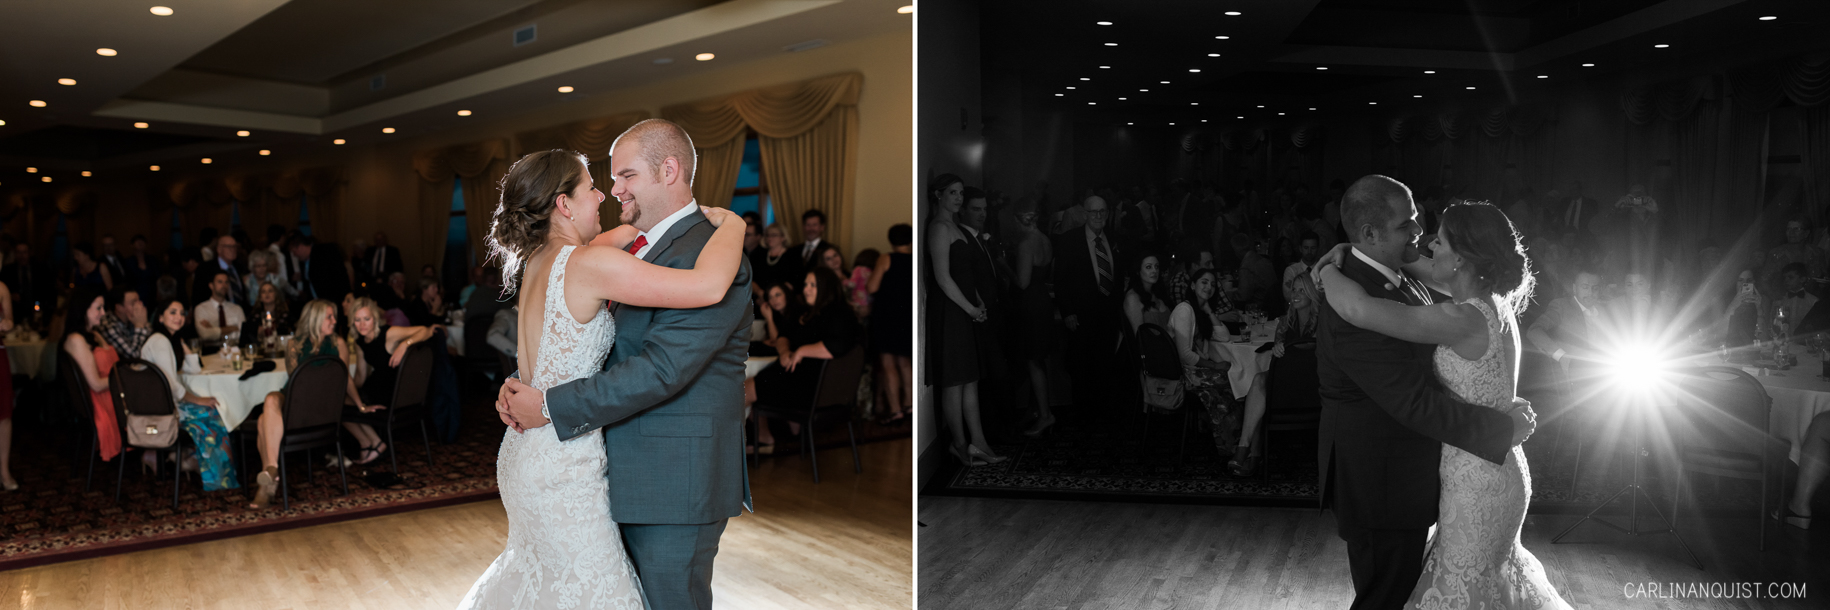 First Dance | The Links Of Glen Eagles Wedding Photographer